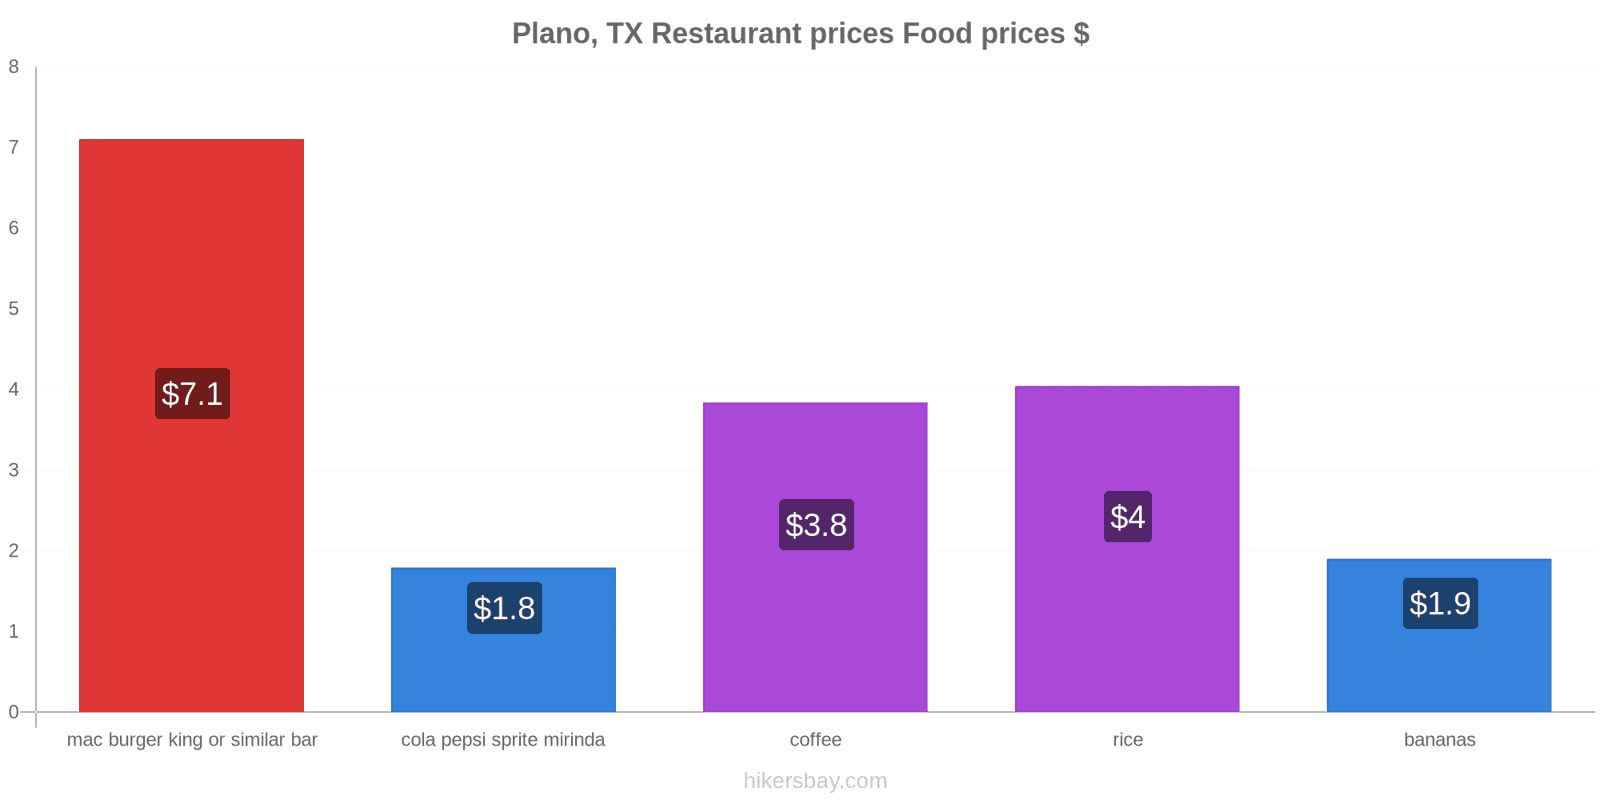 Plano, TX price changes hikersbay.com